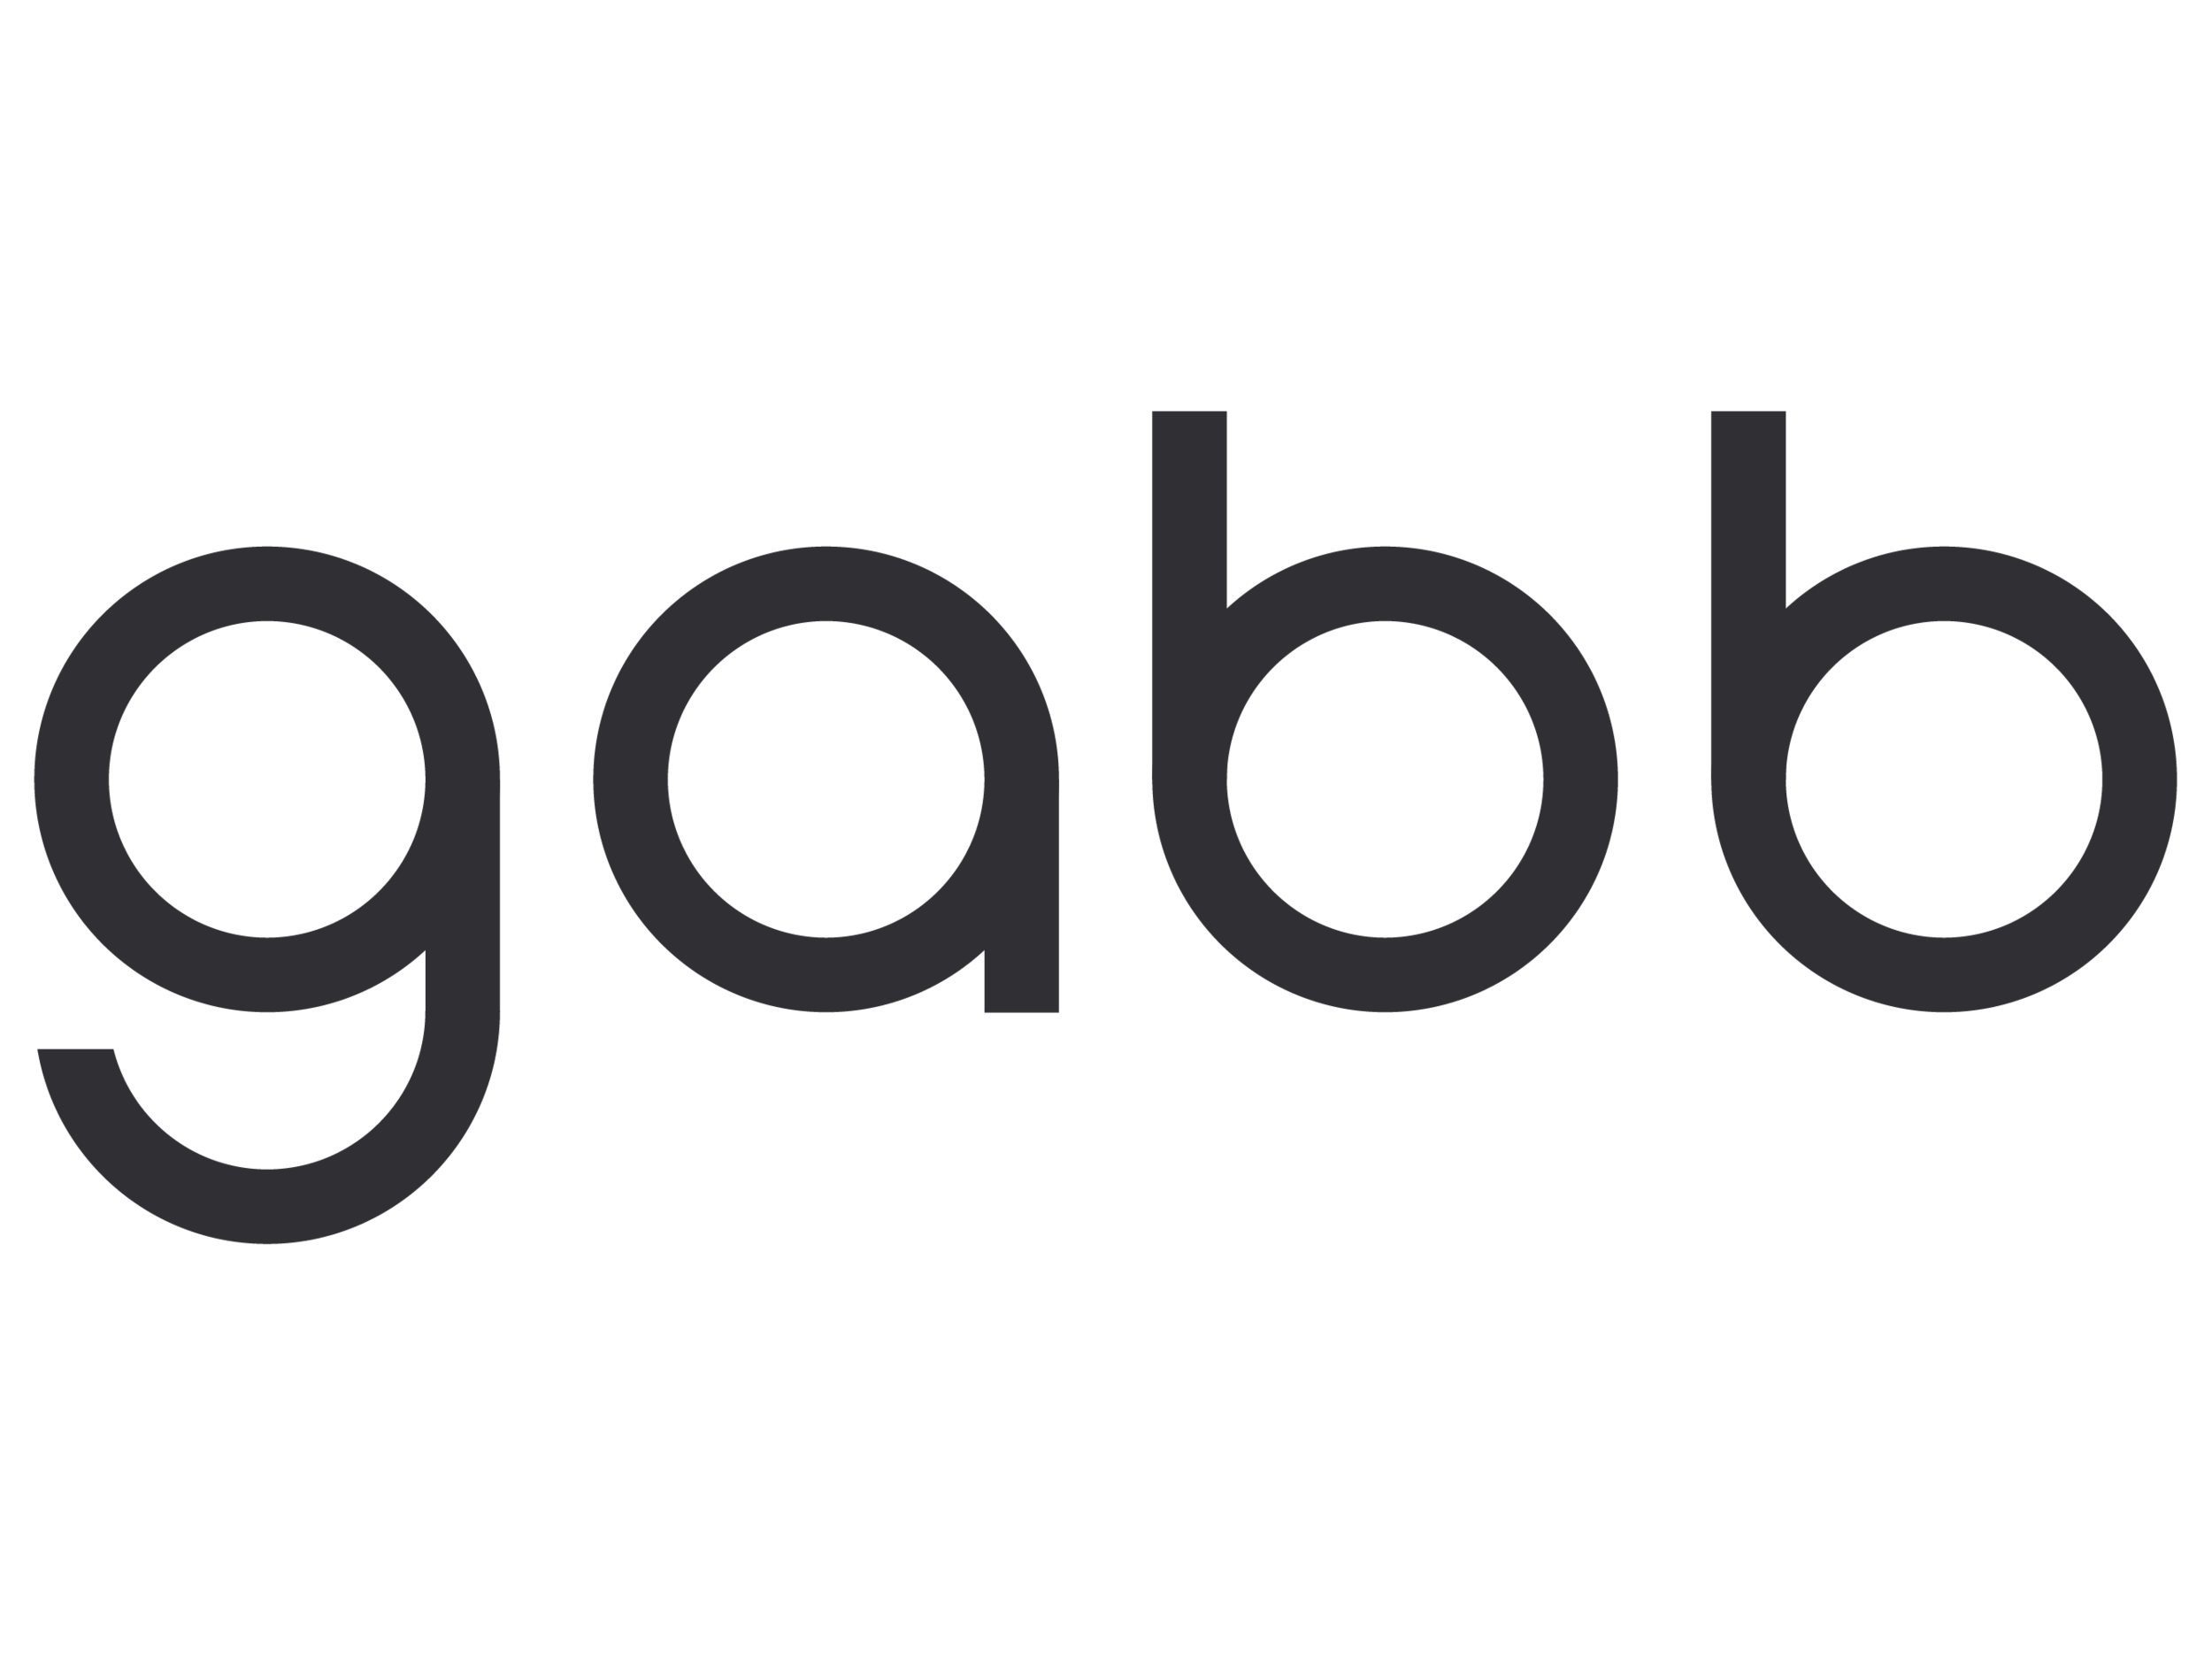 Gabb Design